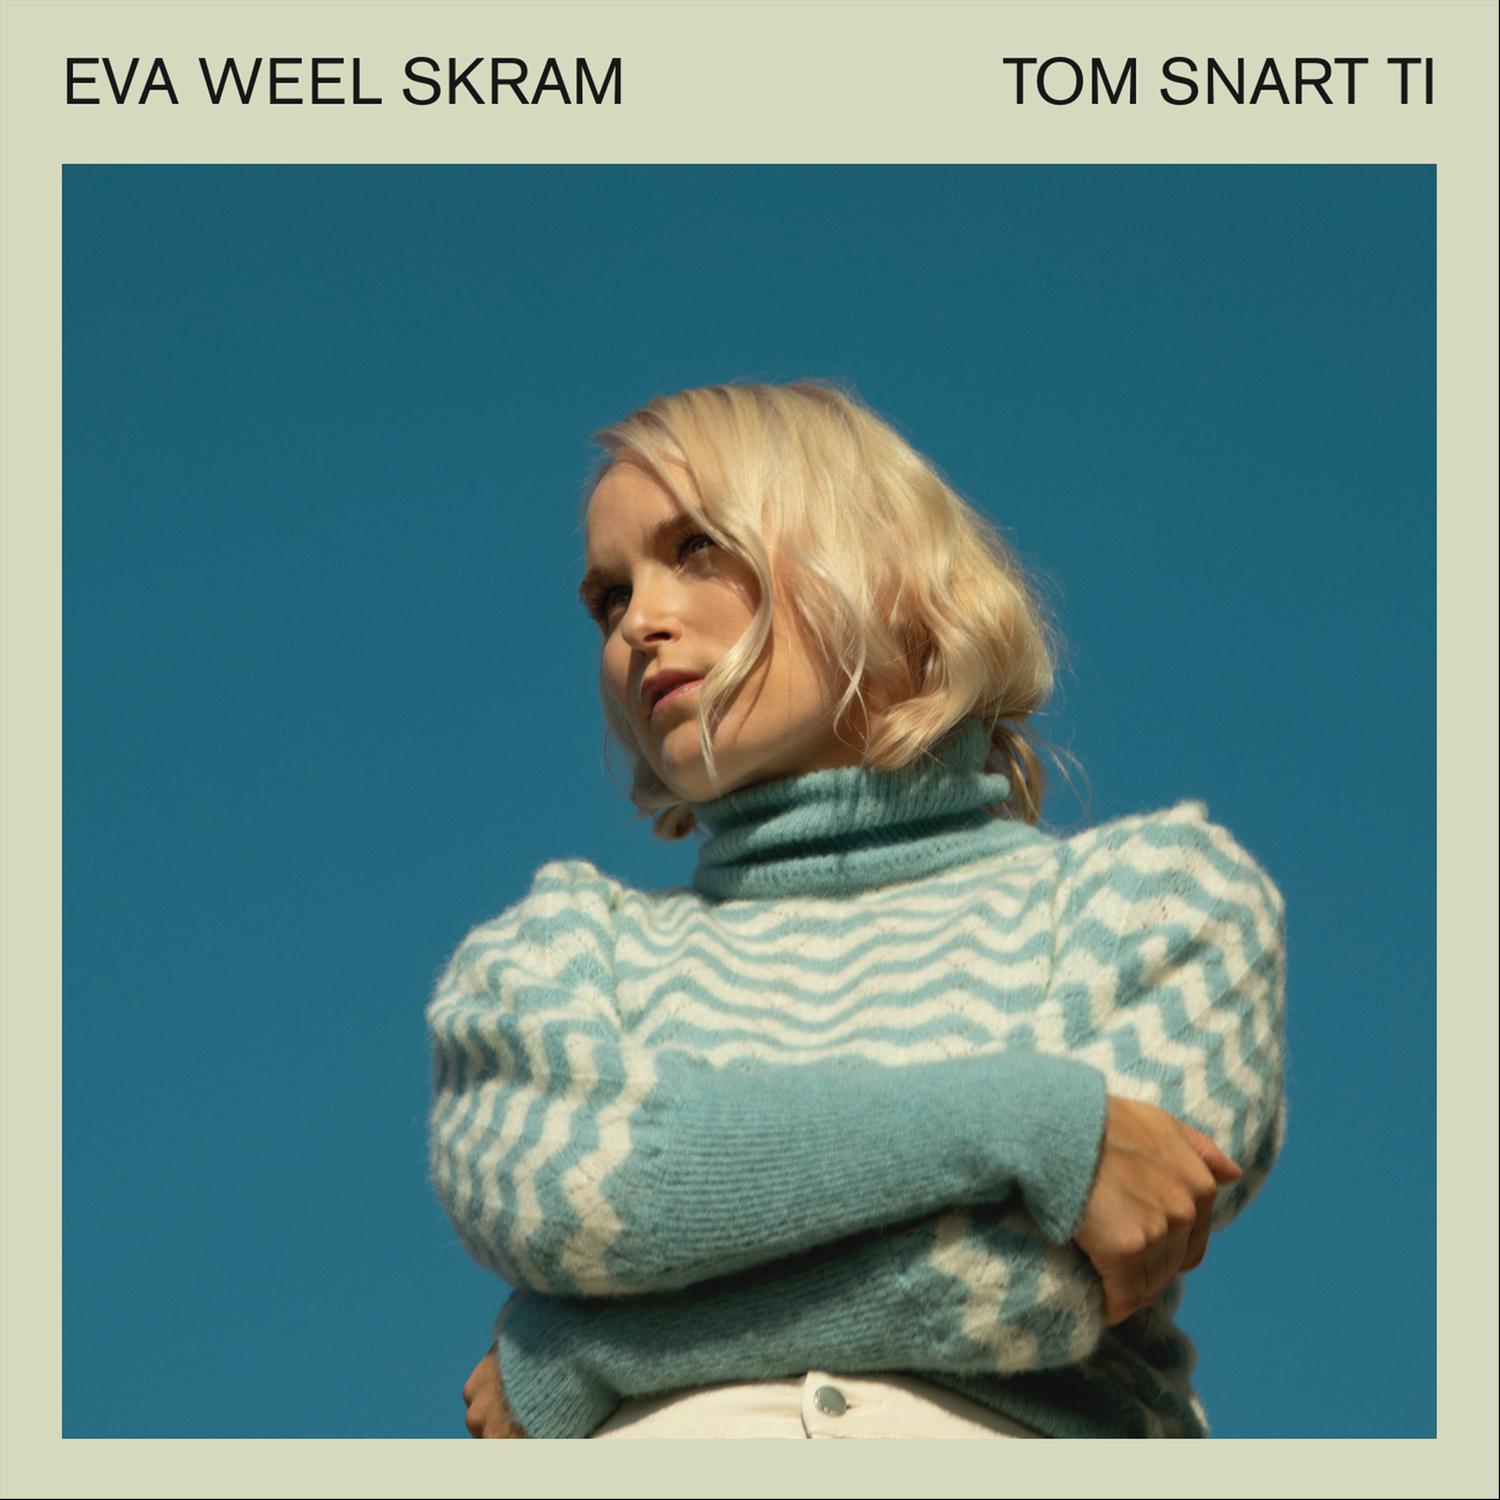 Eva Weel Skram - Tom snart ti